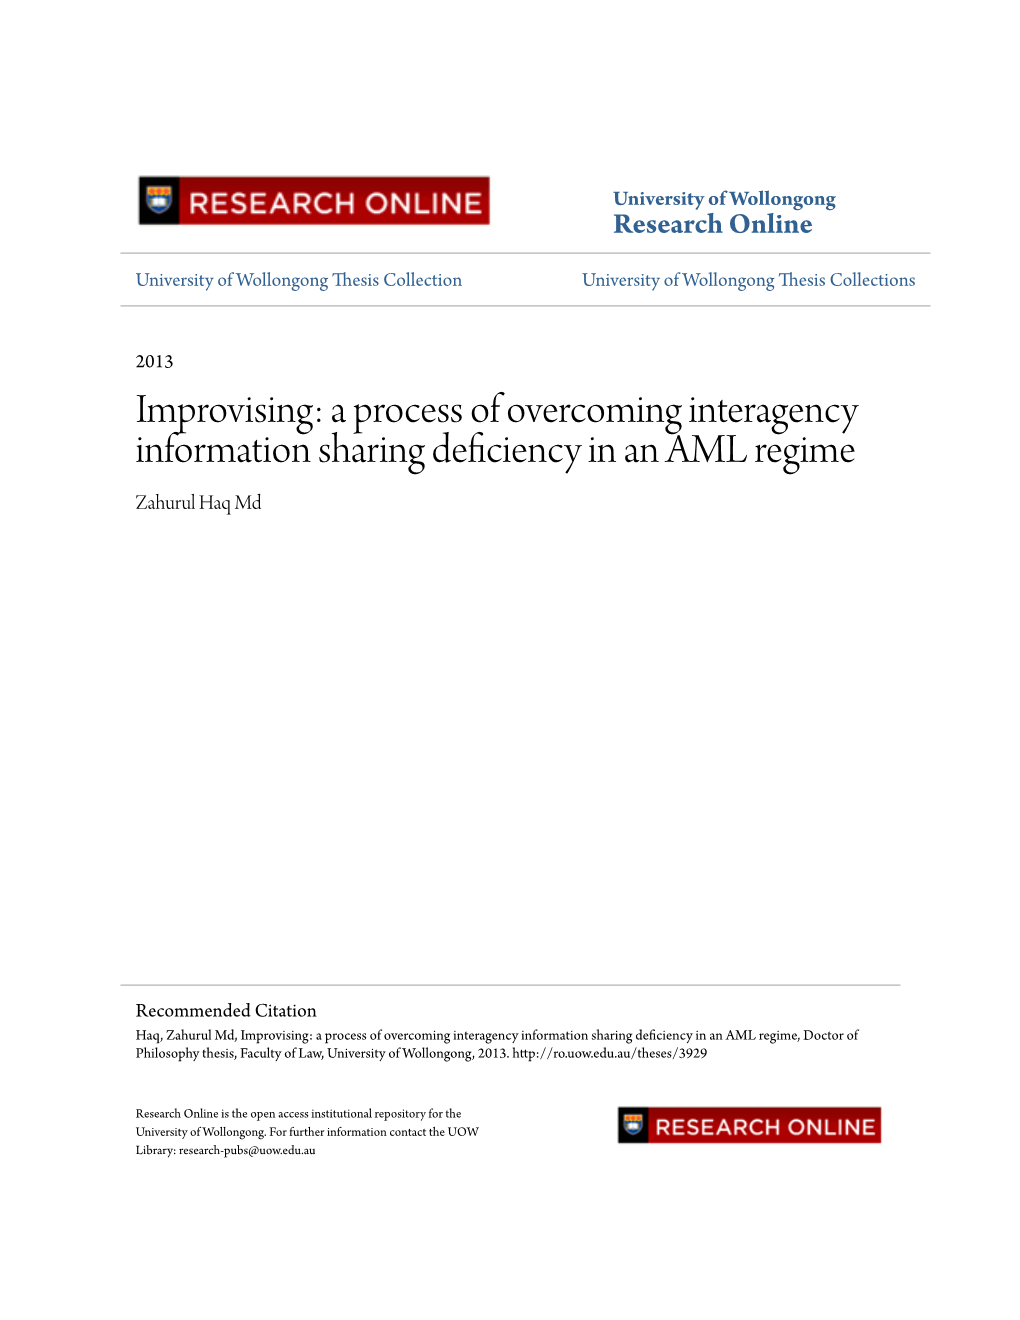 Improvising: a Process of Overcoming Interagency Information Sharing Deficiency in an AML Regime Zahurul Haq Md